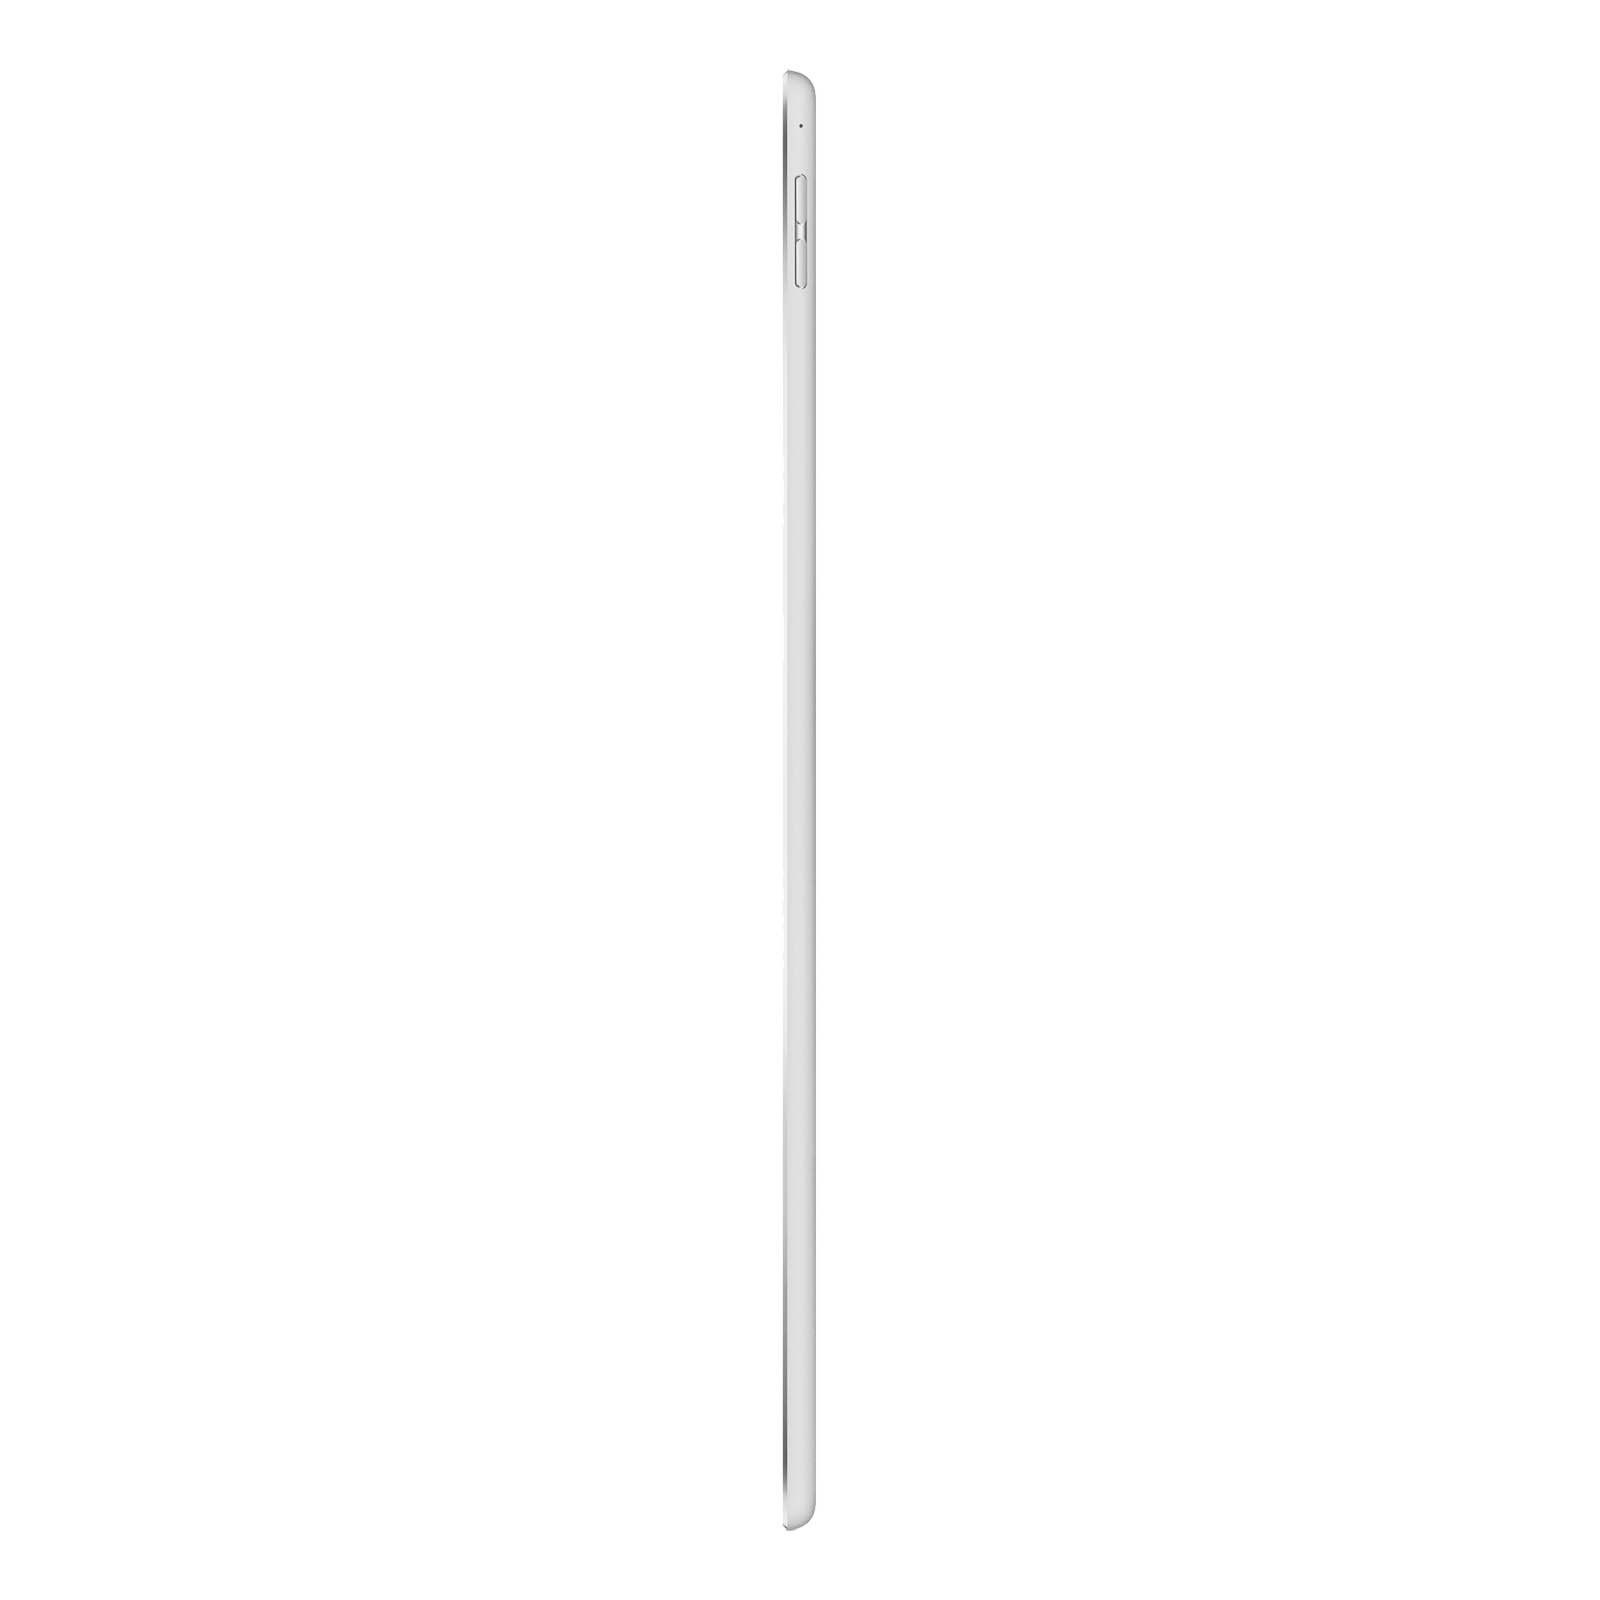 iPad Pro 12.9 Inch 2nd Gen 512GB Silver Very Good - Unlocked